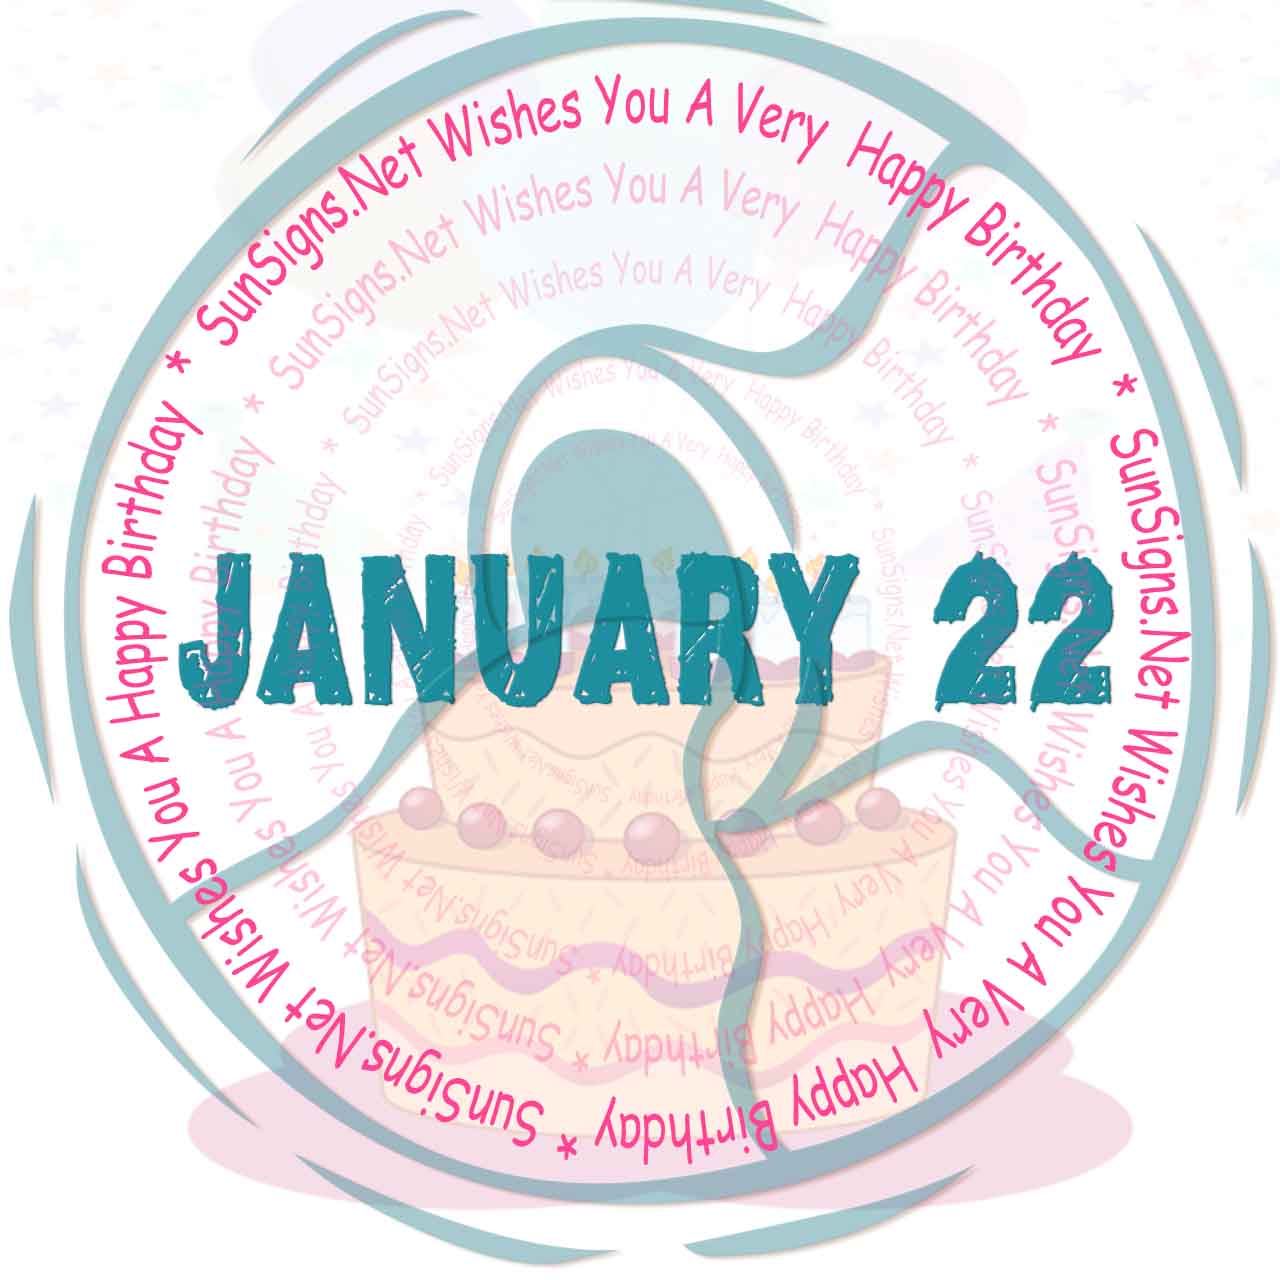 January 22 Zodiac Is A Cusp Capricorn and Aquarius, Birthdays And